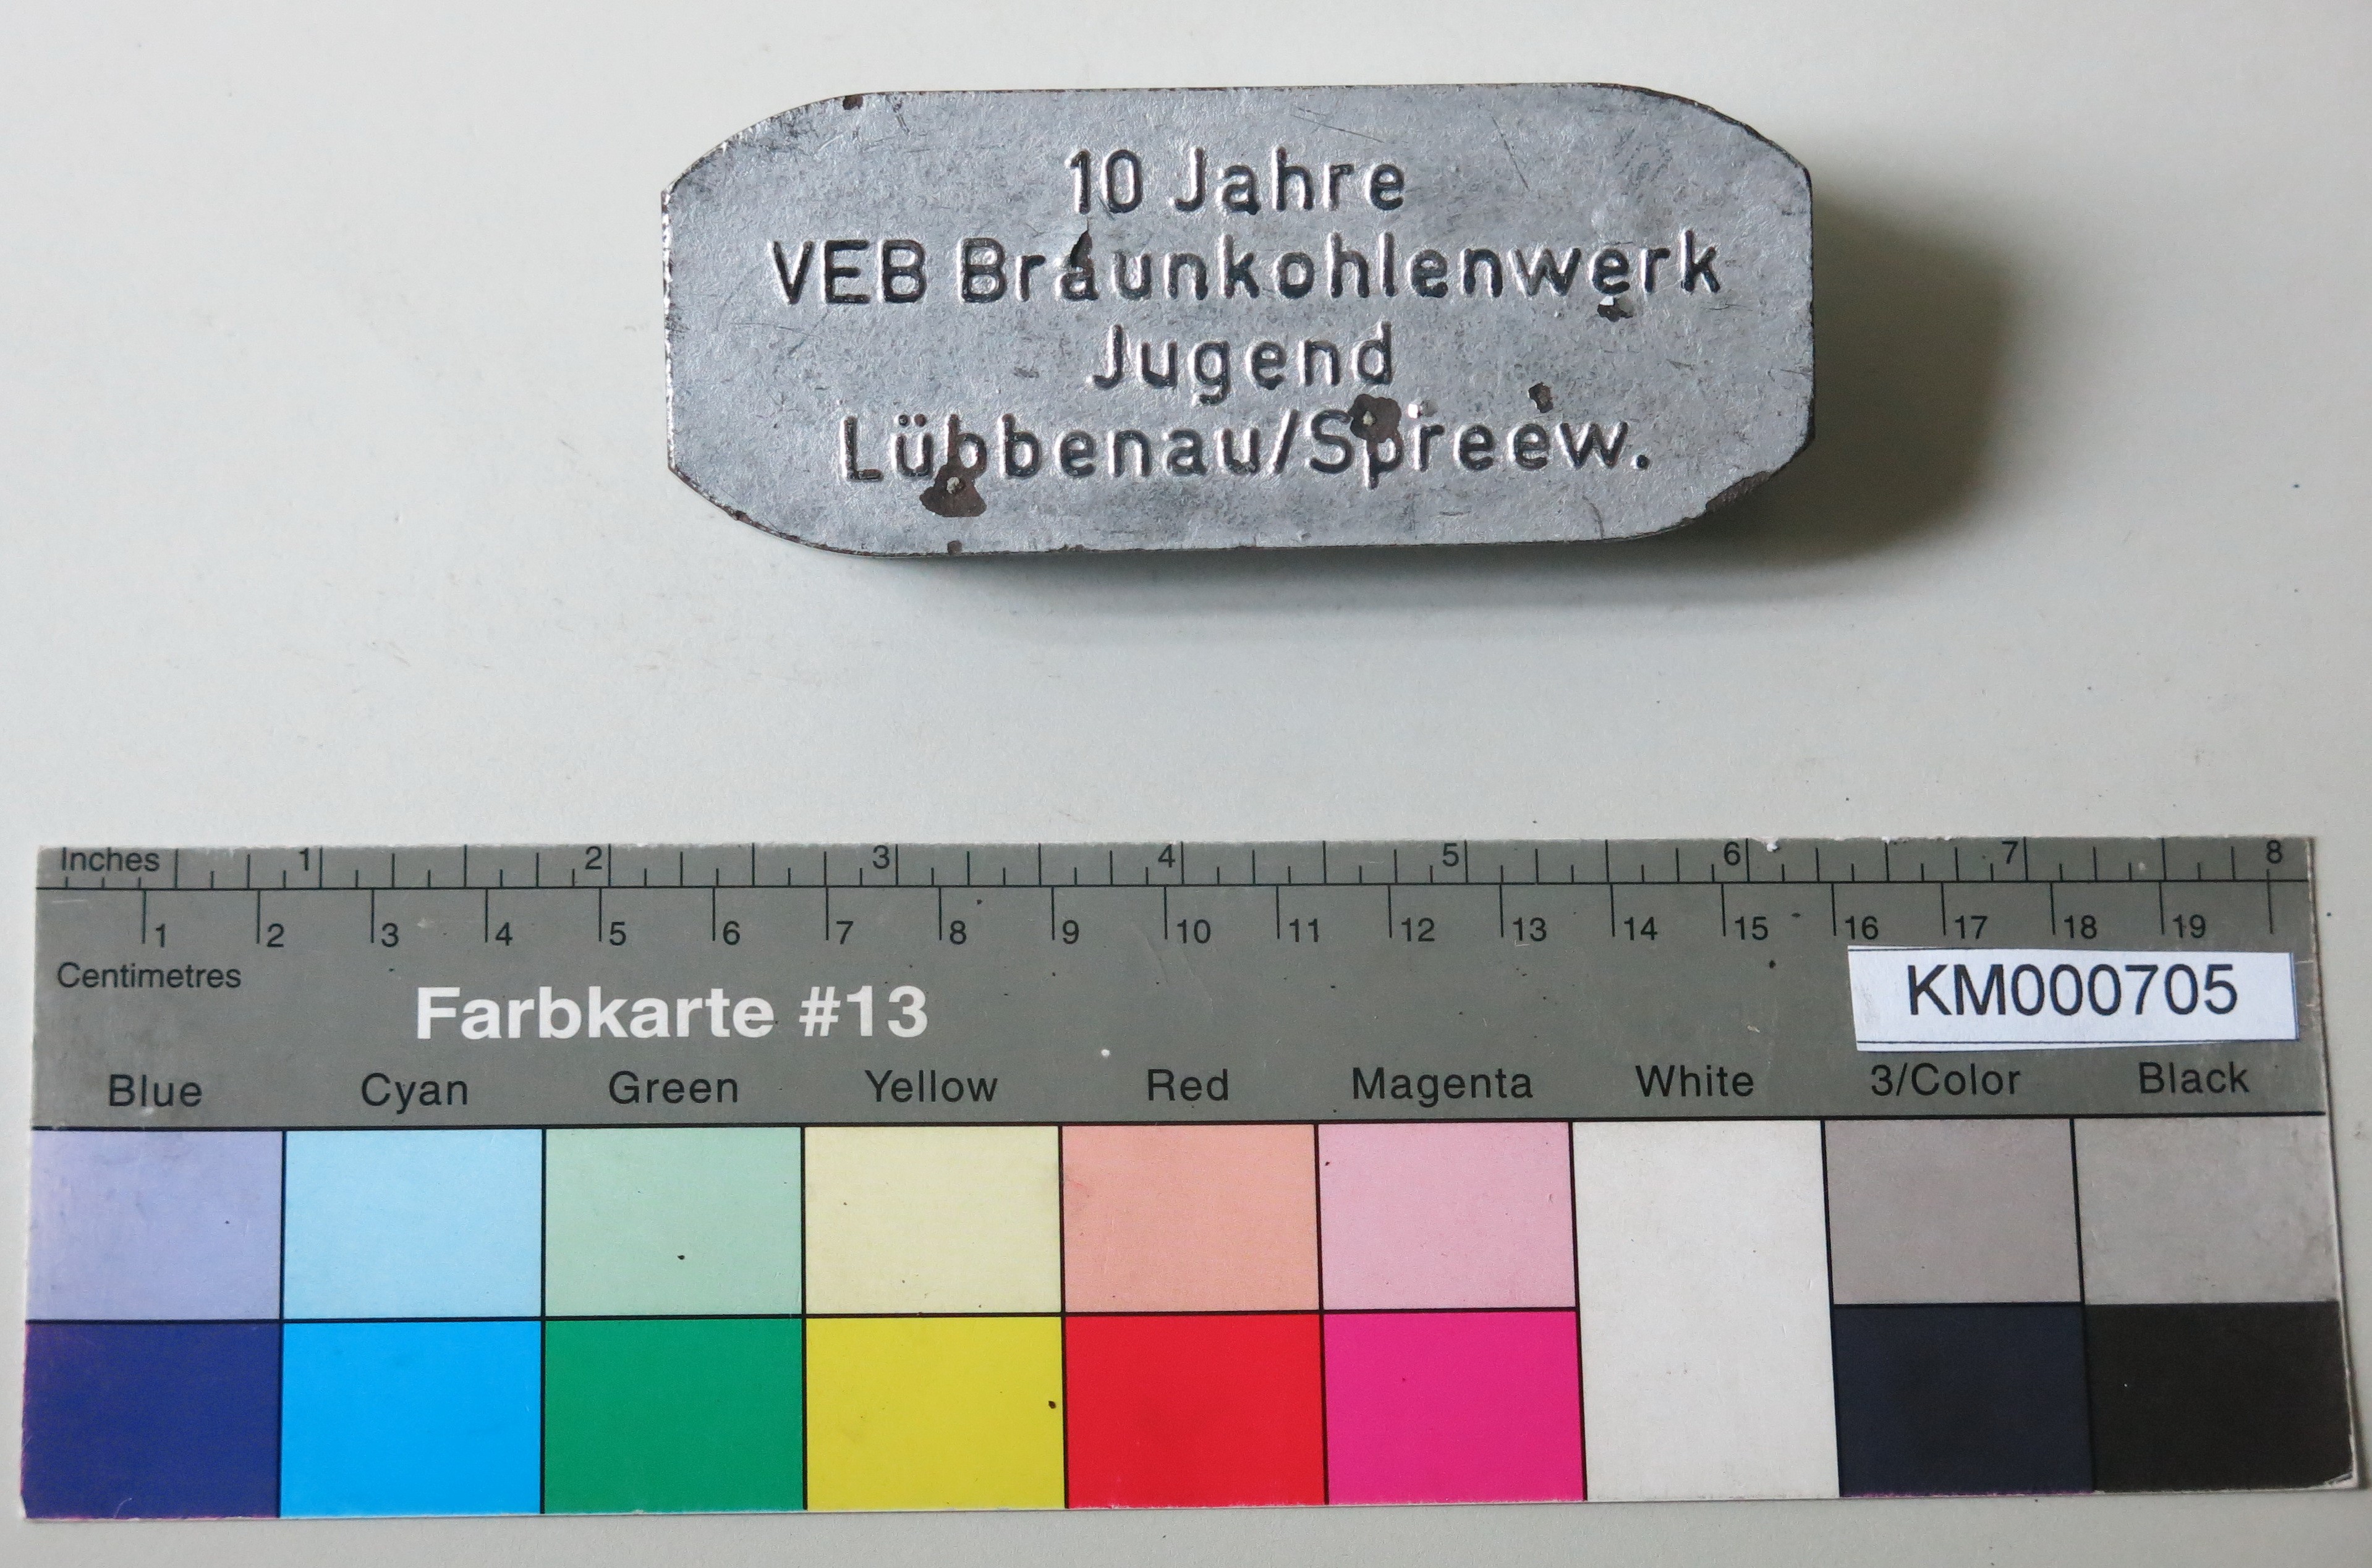 Zierbrikett "10 Jahre VEB Braunkohlenwerk Jugend Lübbenau/Spreew." (Energiefabrik Knappenrode CC BY-SA)